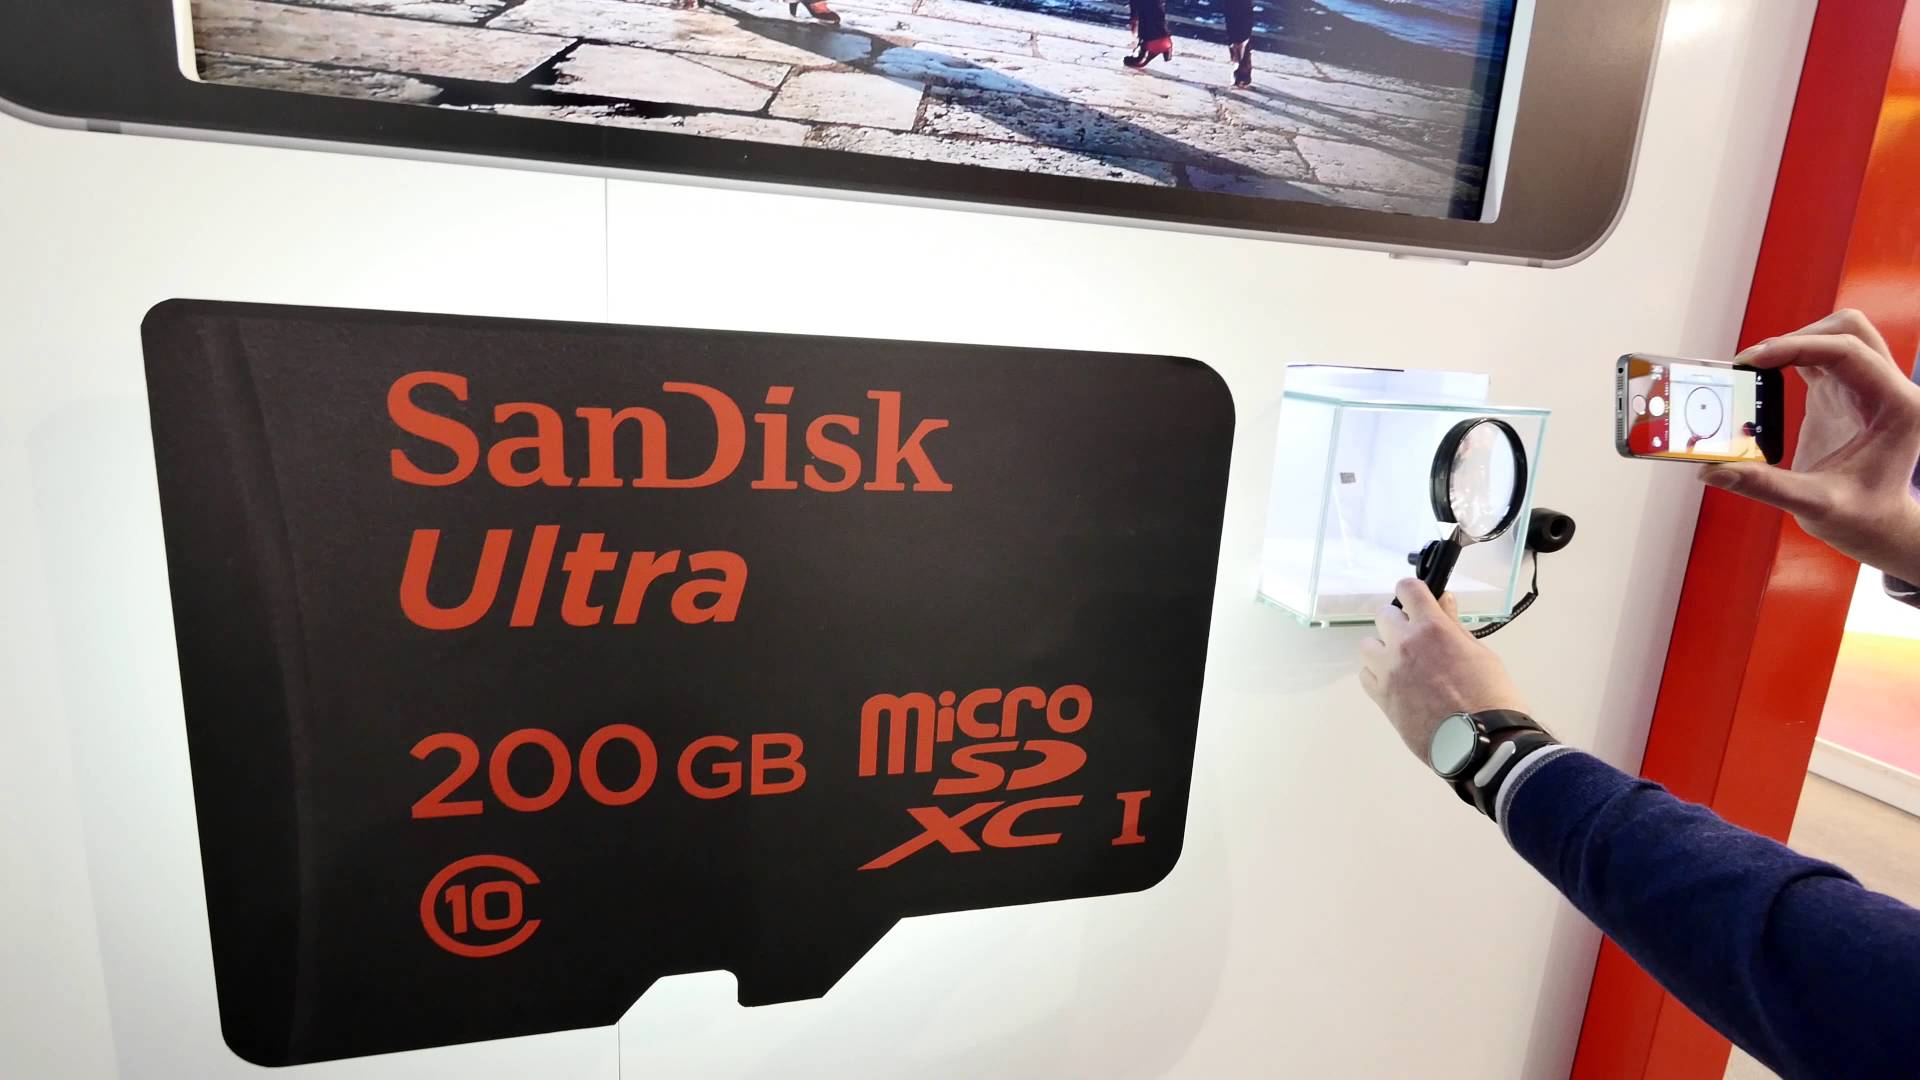  SanDisk’s 200GB 